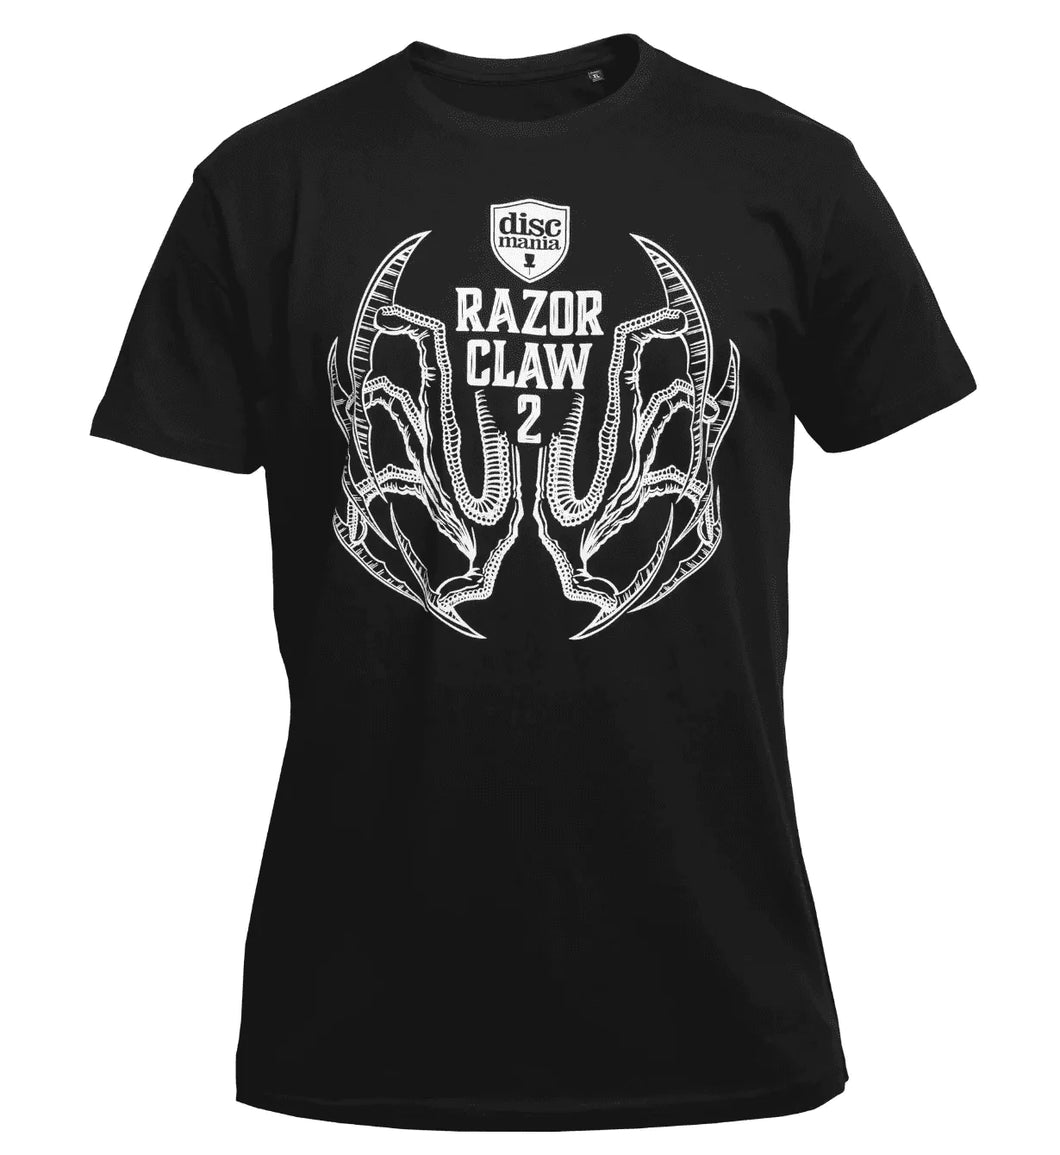 Discmania - Razor Claw 2 Shirt